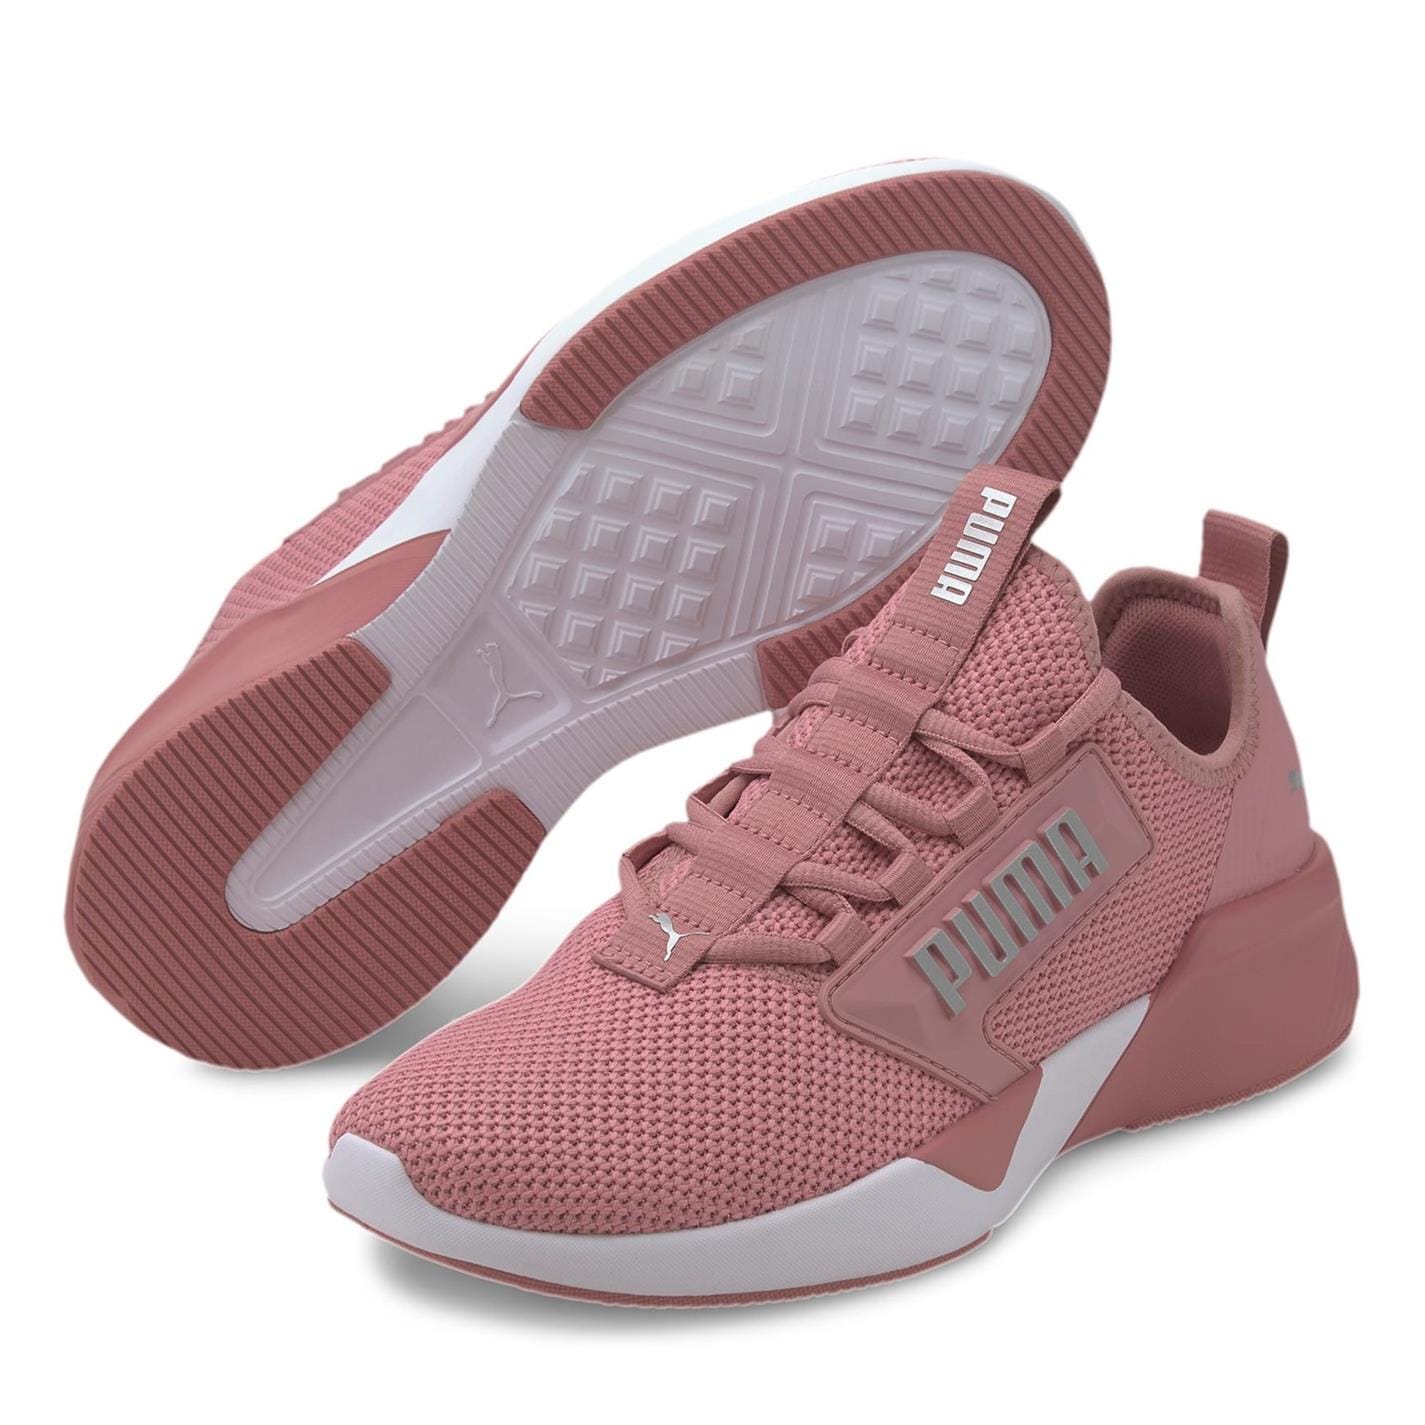 Adidasi sport Puma Retaliate pentru Femei roz